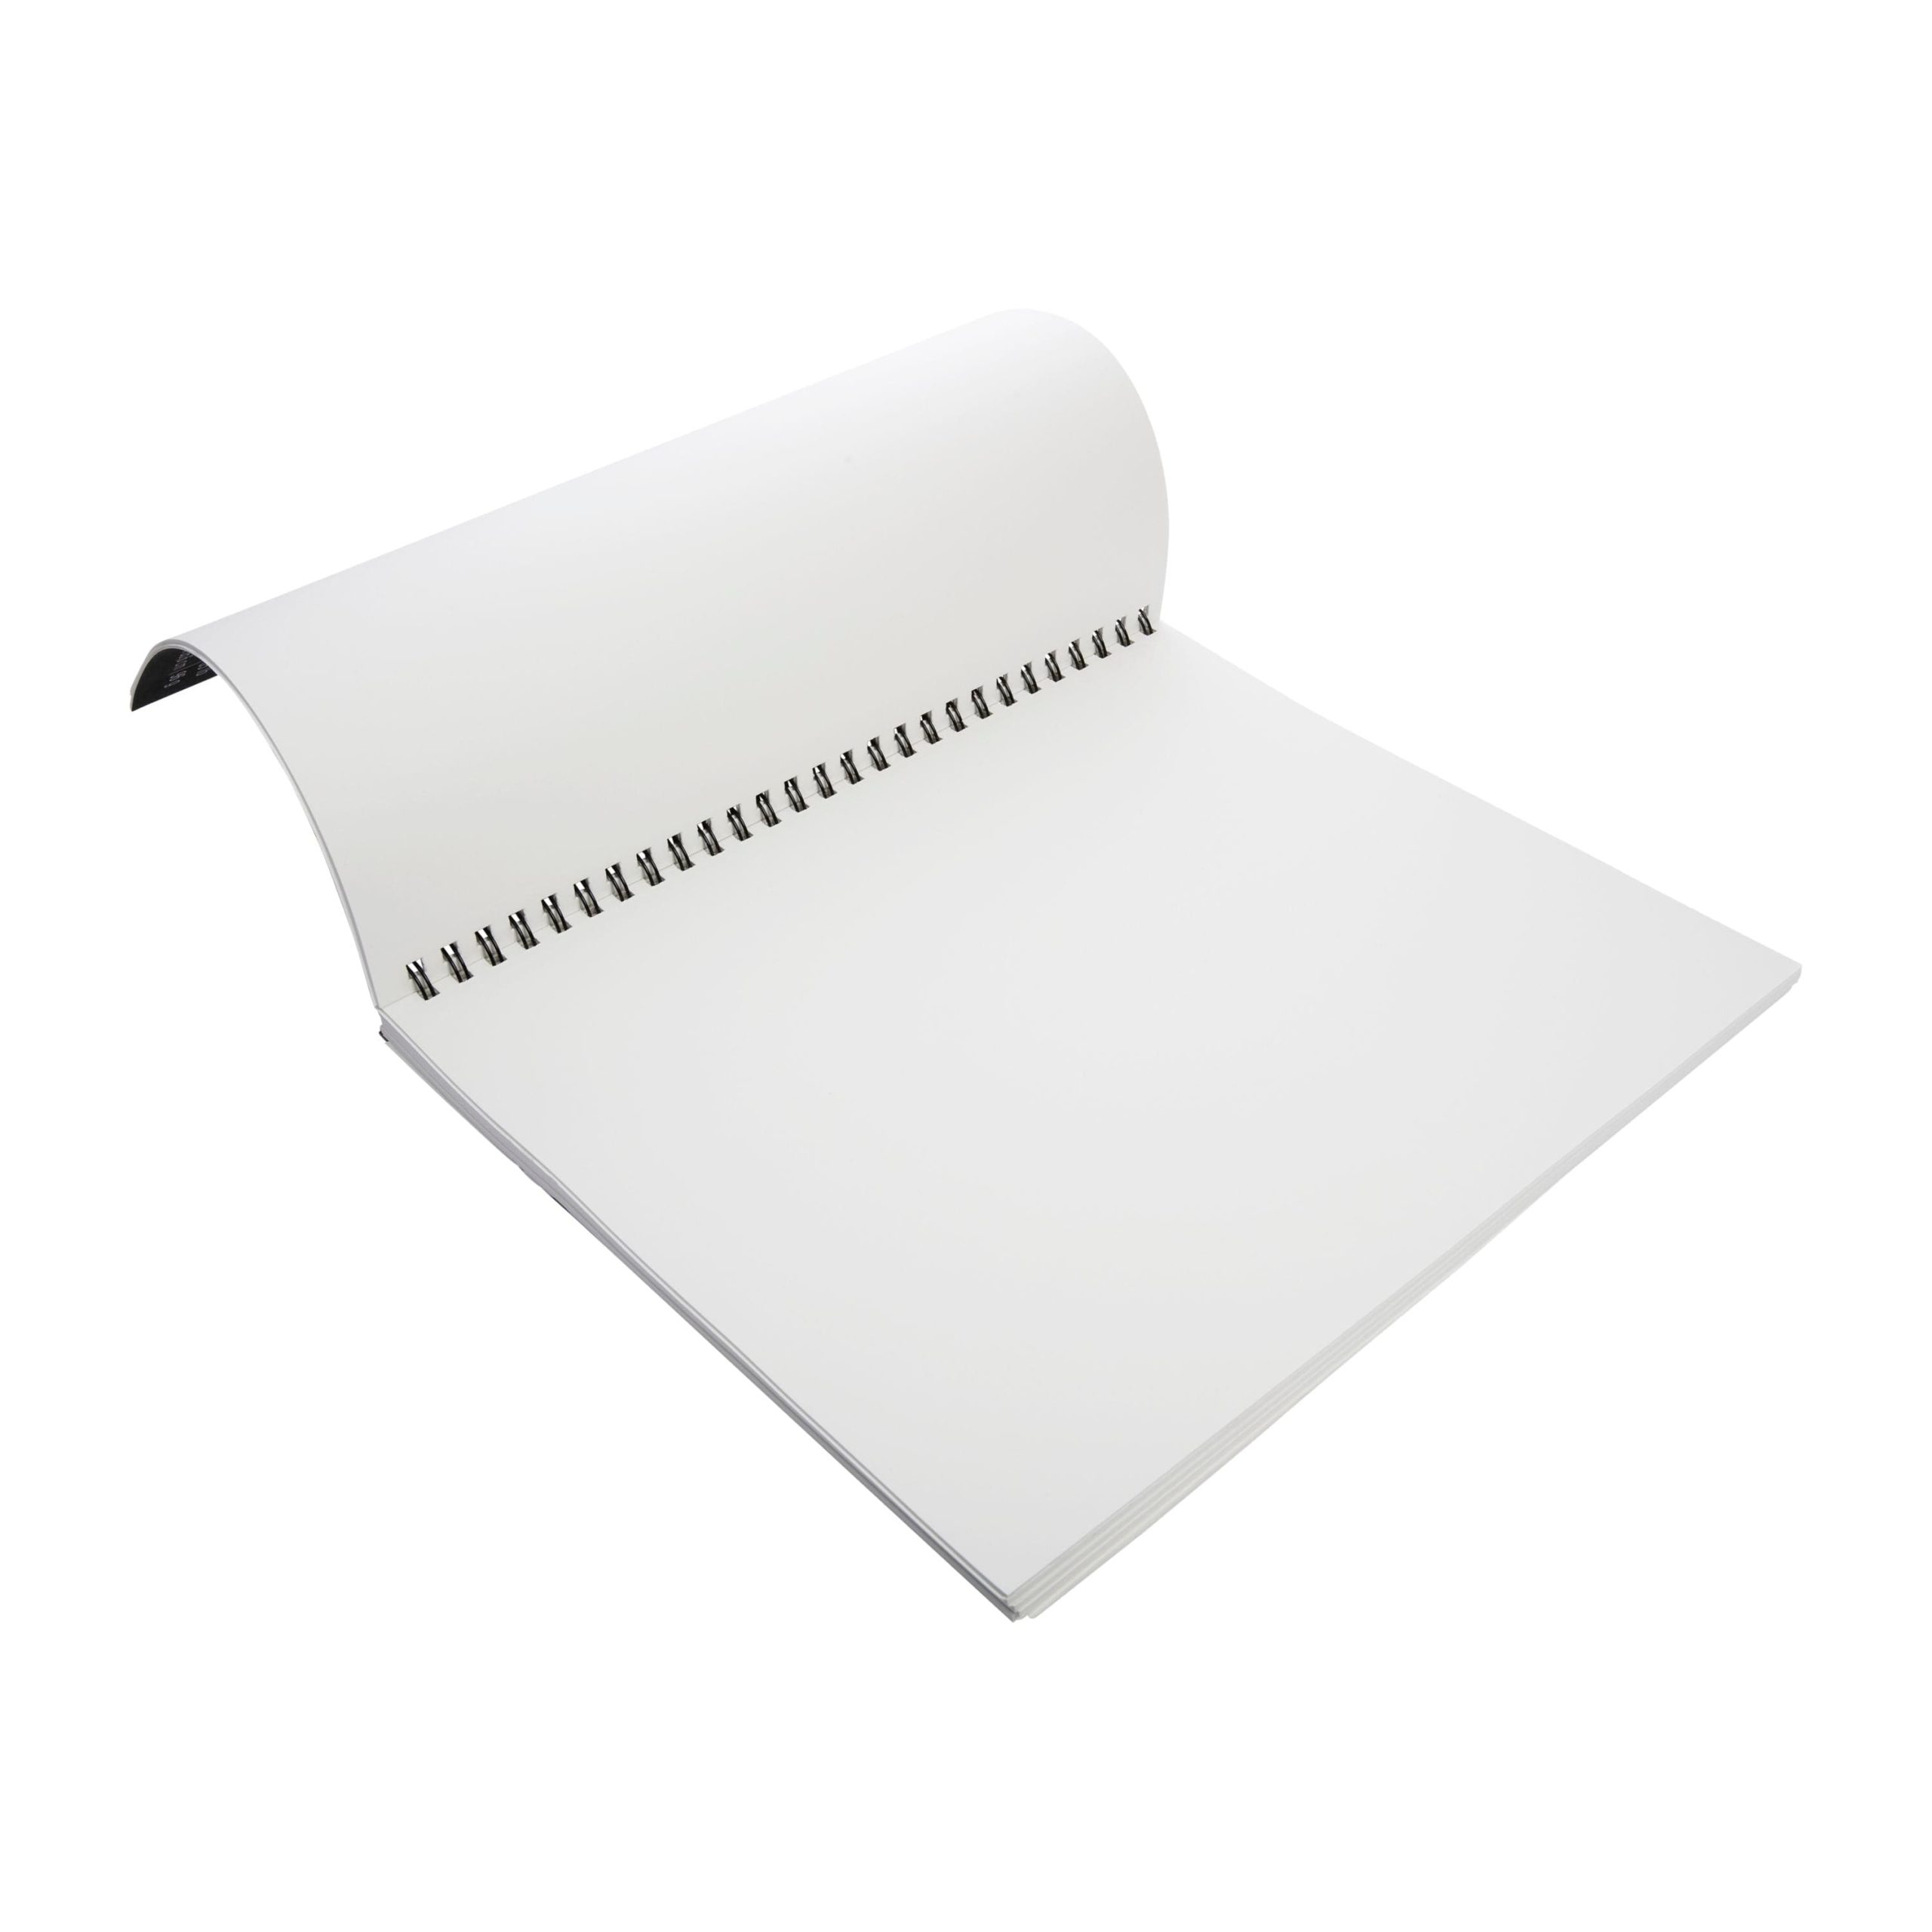 Canson Sketch Paper Roll - 43x 11 yd (1092 MMX 10 M) - 160gsm